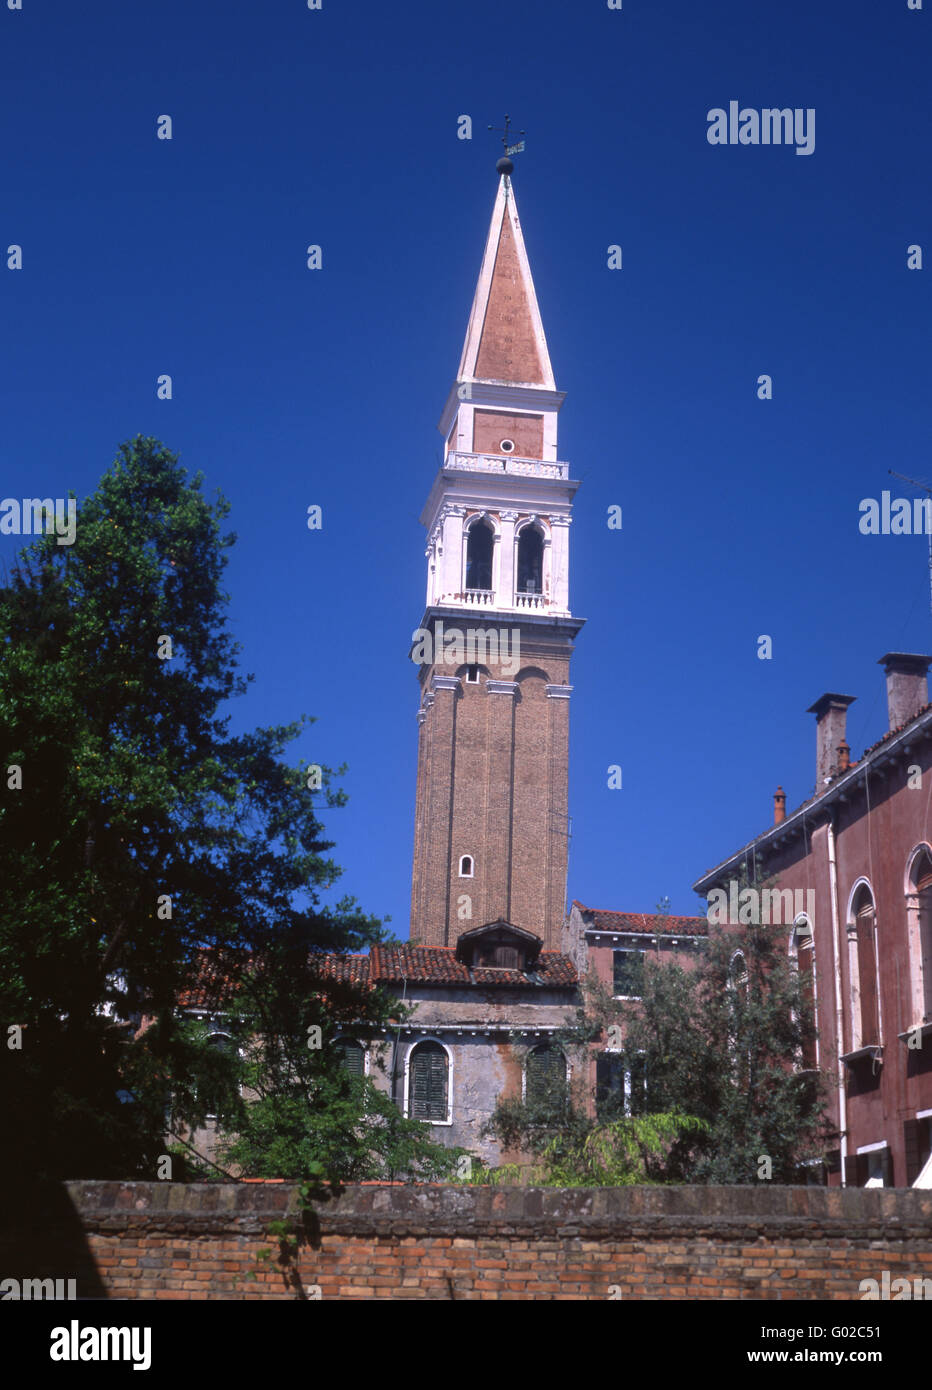 San Francesco della Vigna campanile church tower belltower Castello sestier Venice Veneto Italy Stock Photo